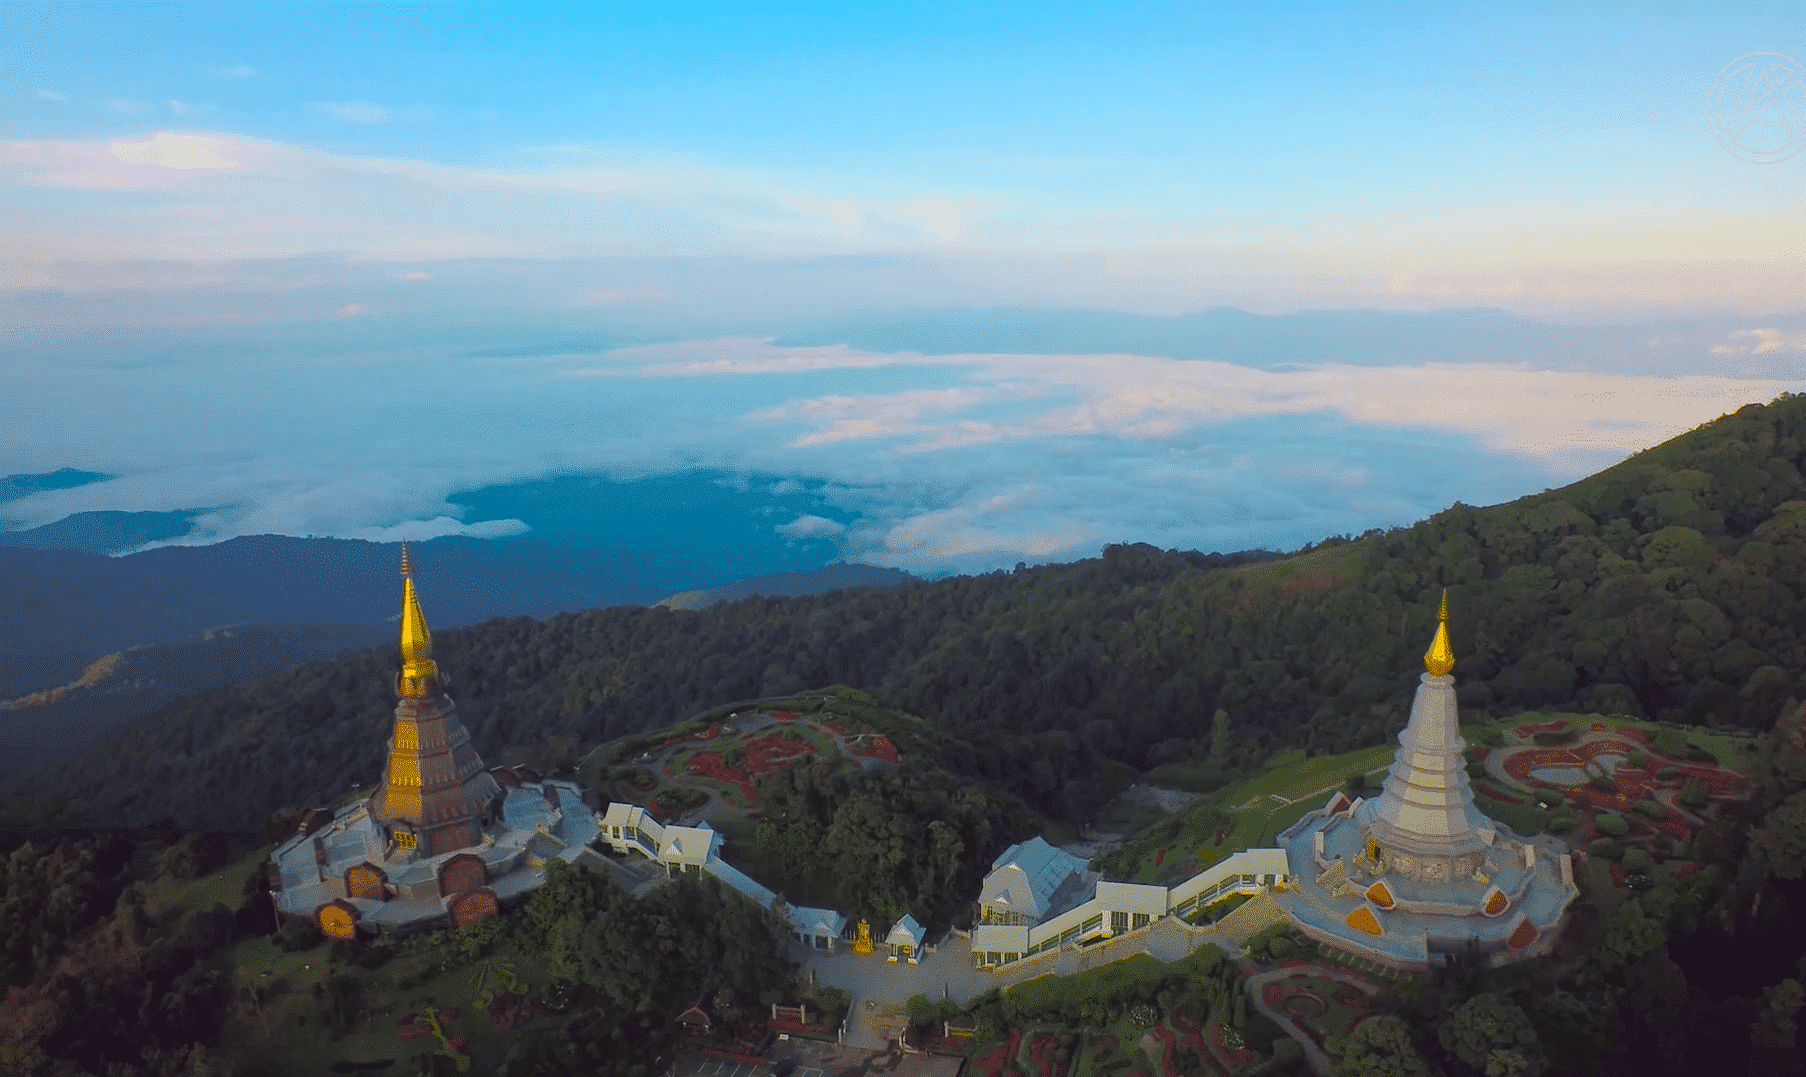 Twin Stupas